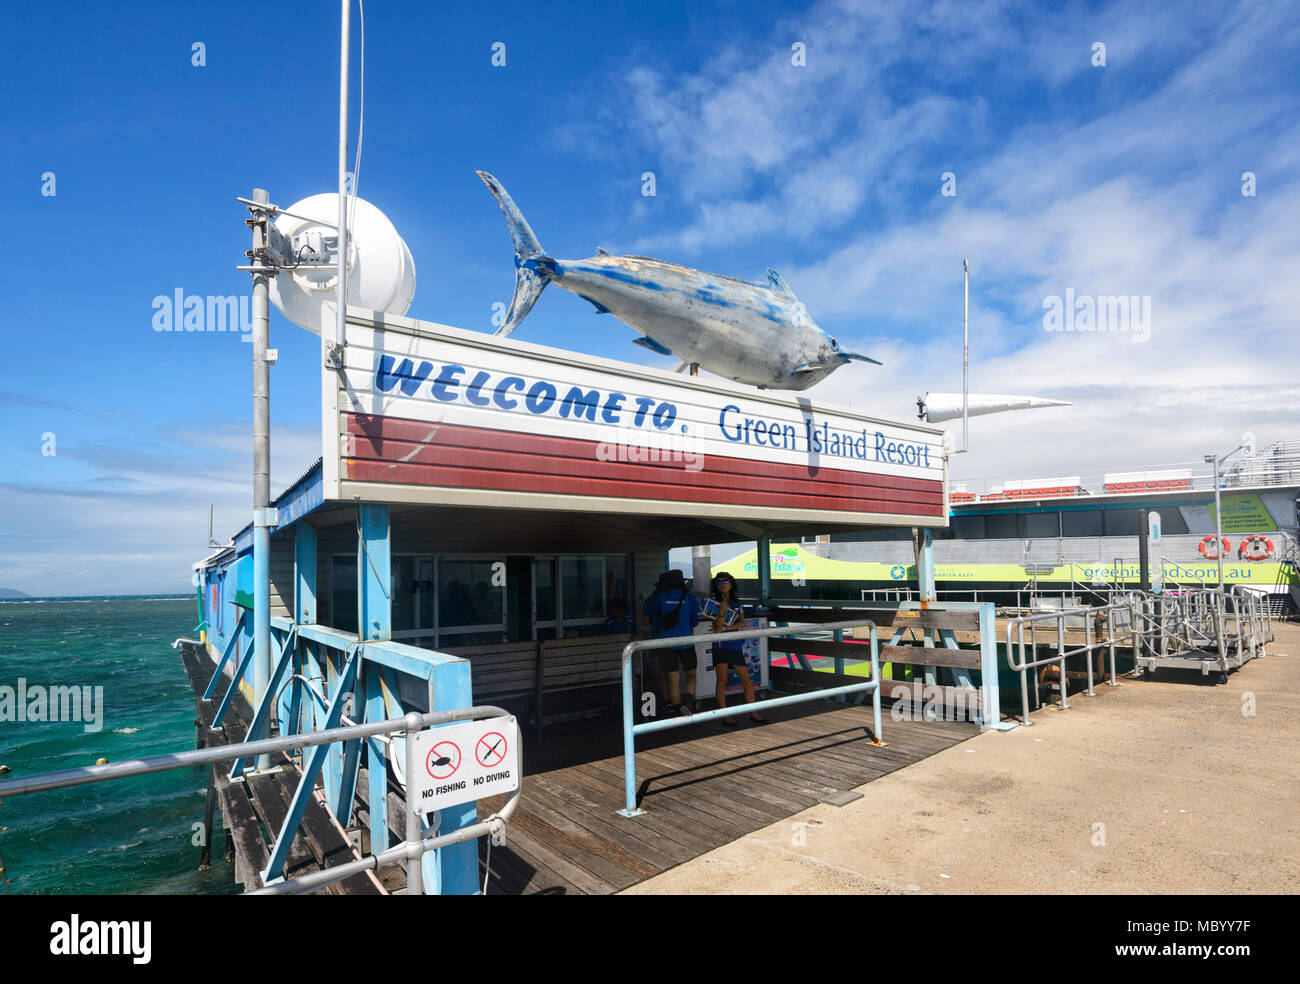 Bienvenue à Green Island Resort signe, Grande Barrière de corail, l'extrême nord du Queensland, Queensland, FNQ, GBR, Australie Banque D'Images